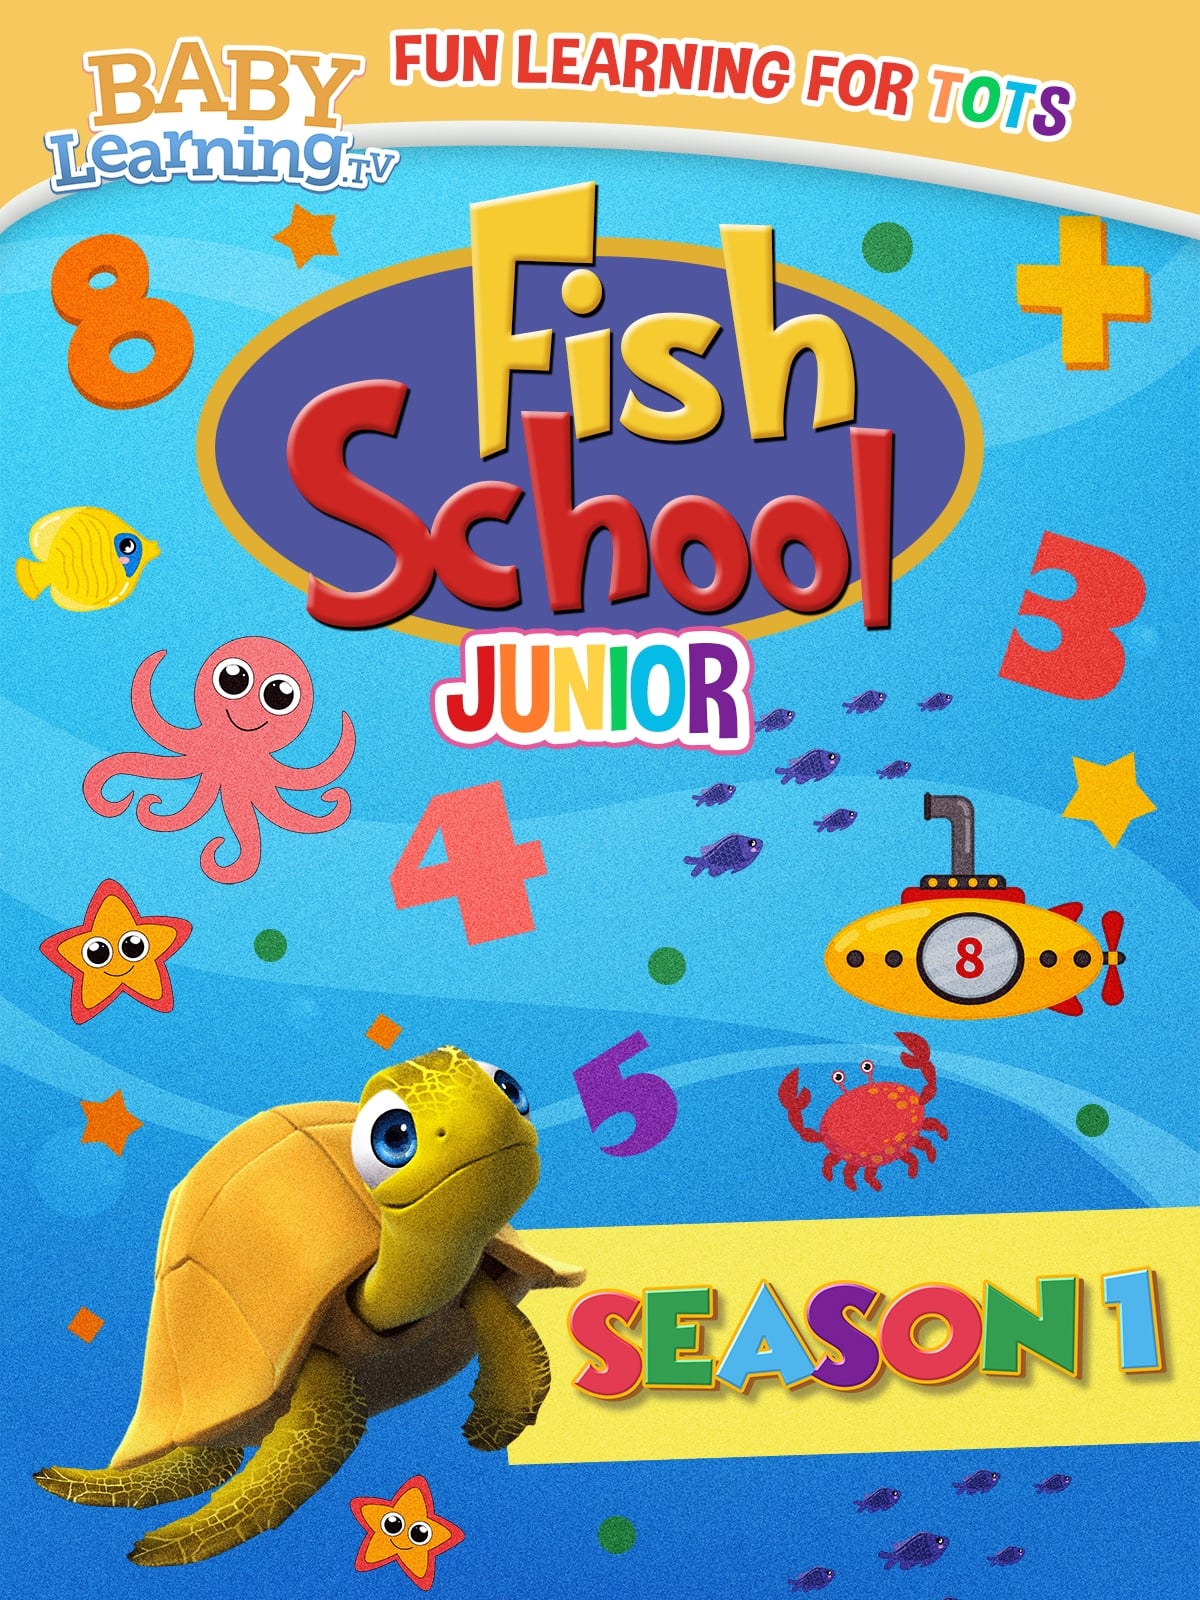 Fish School Junior Season 1